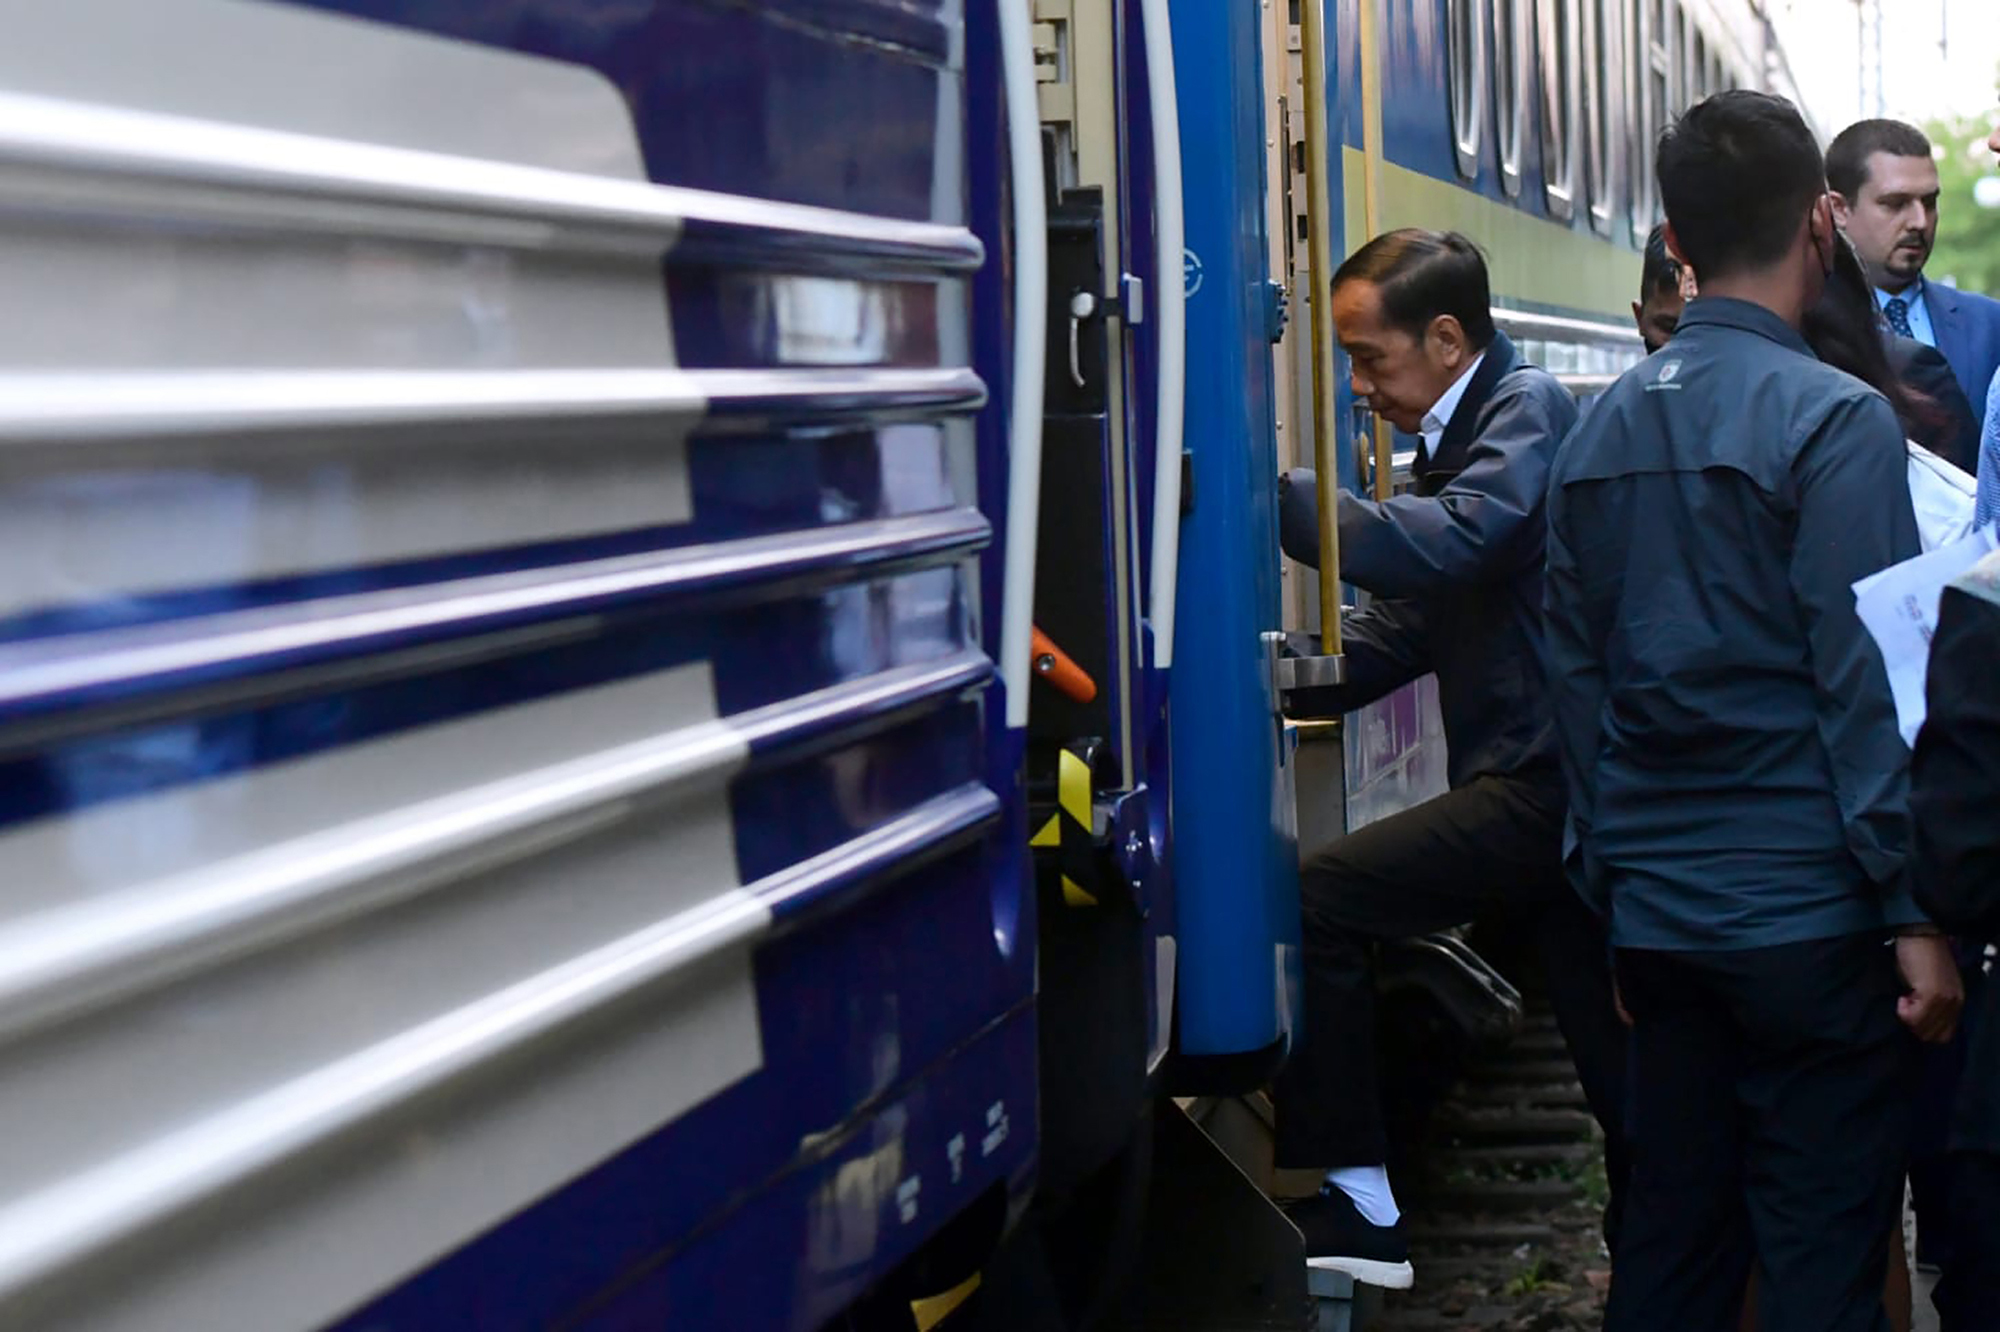 Indonesian President Joko Widodo boards a train that will take him to Kyiv, Ukraine, at a railway station in Przemysl, Poland on June 28.